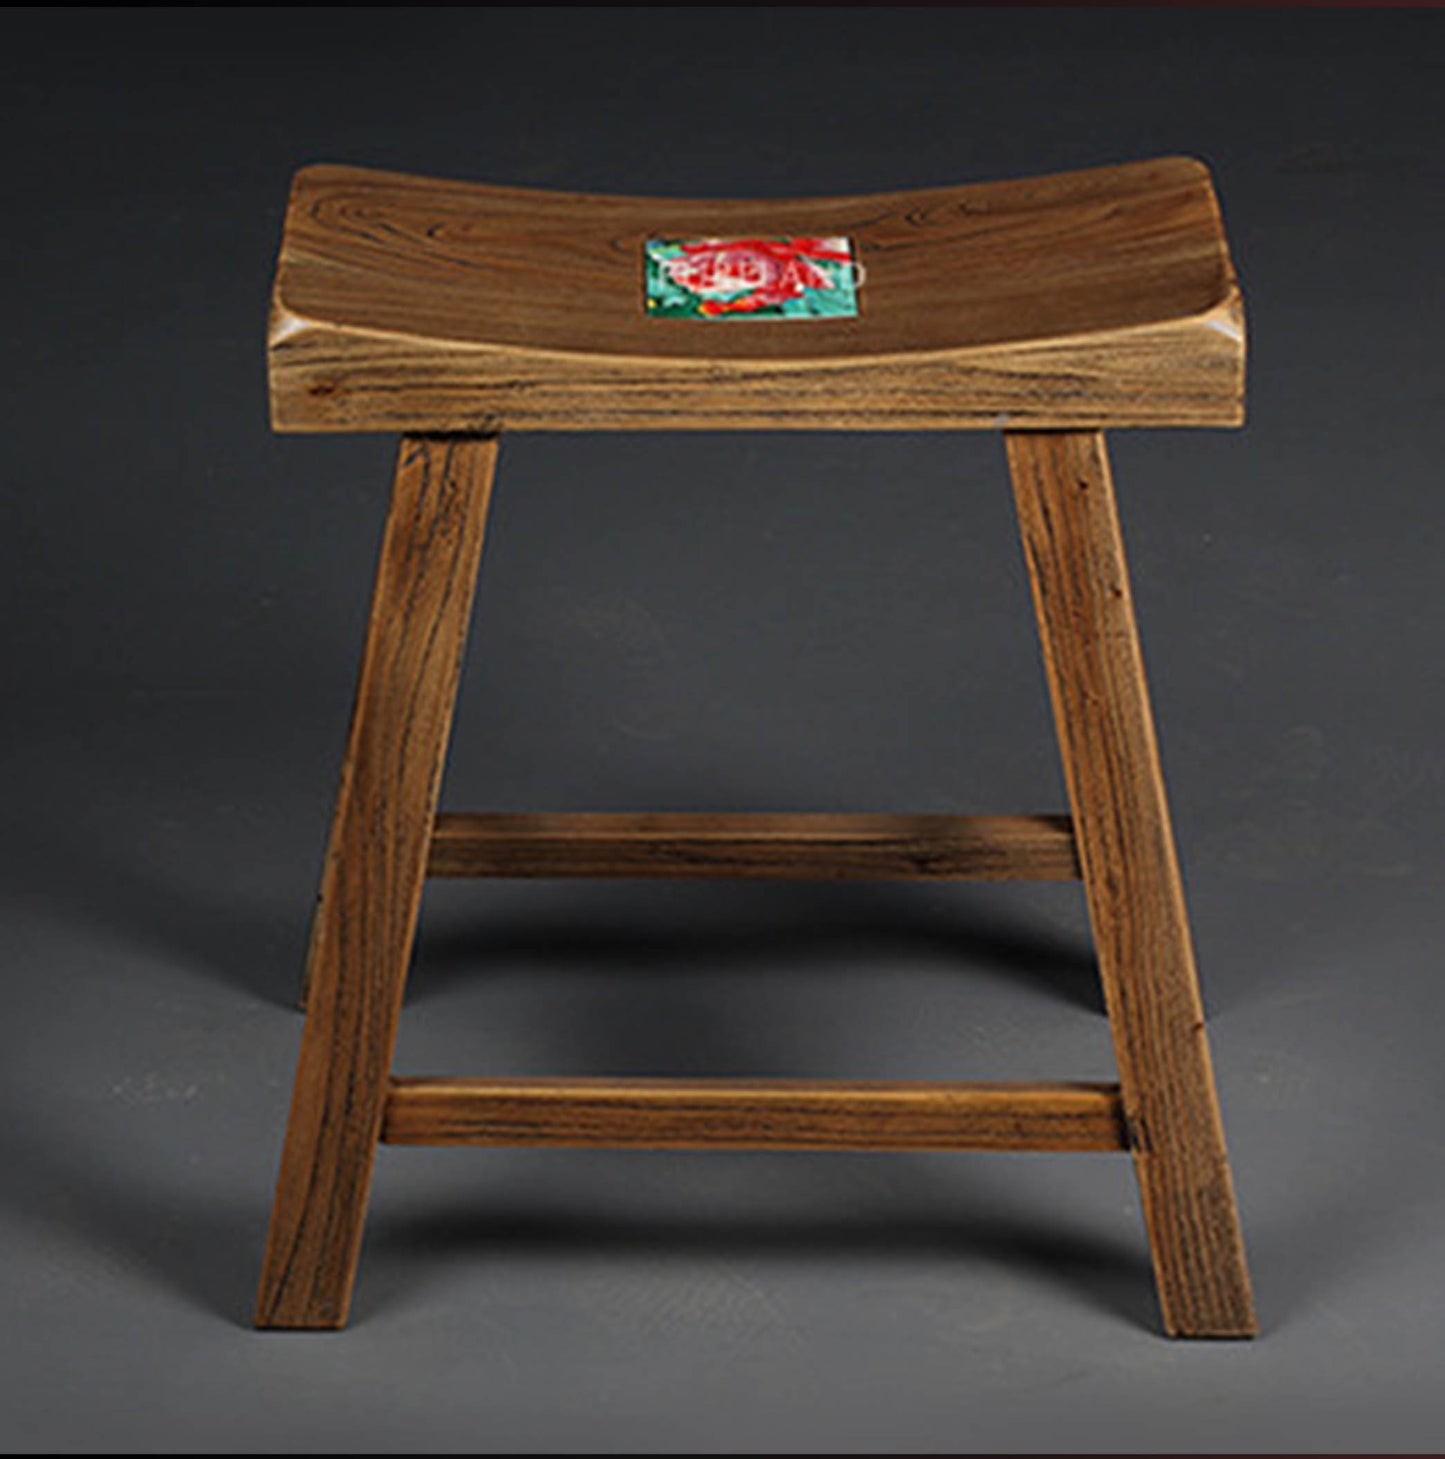 Medium Brown Wooden Gold Ingot Chair